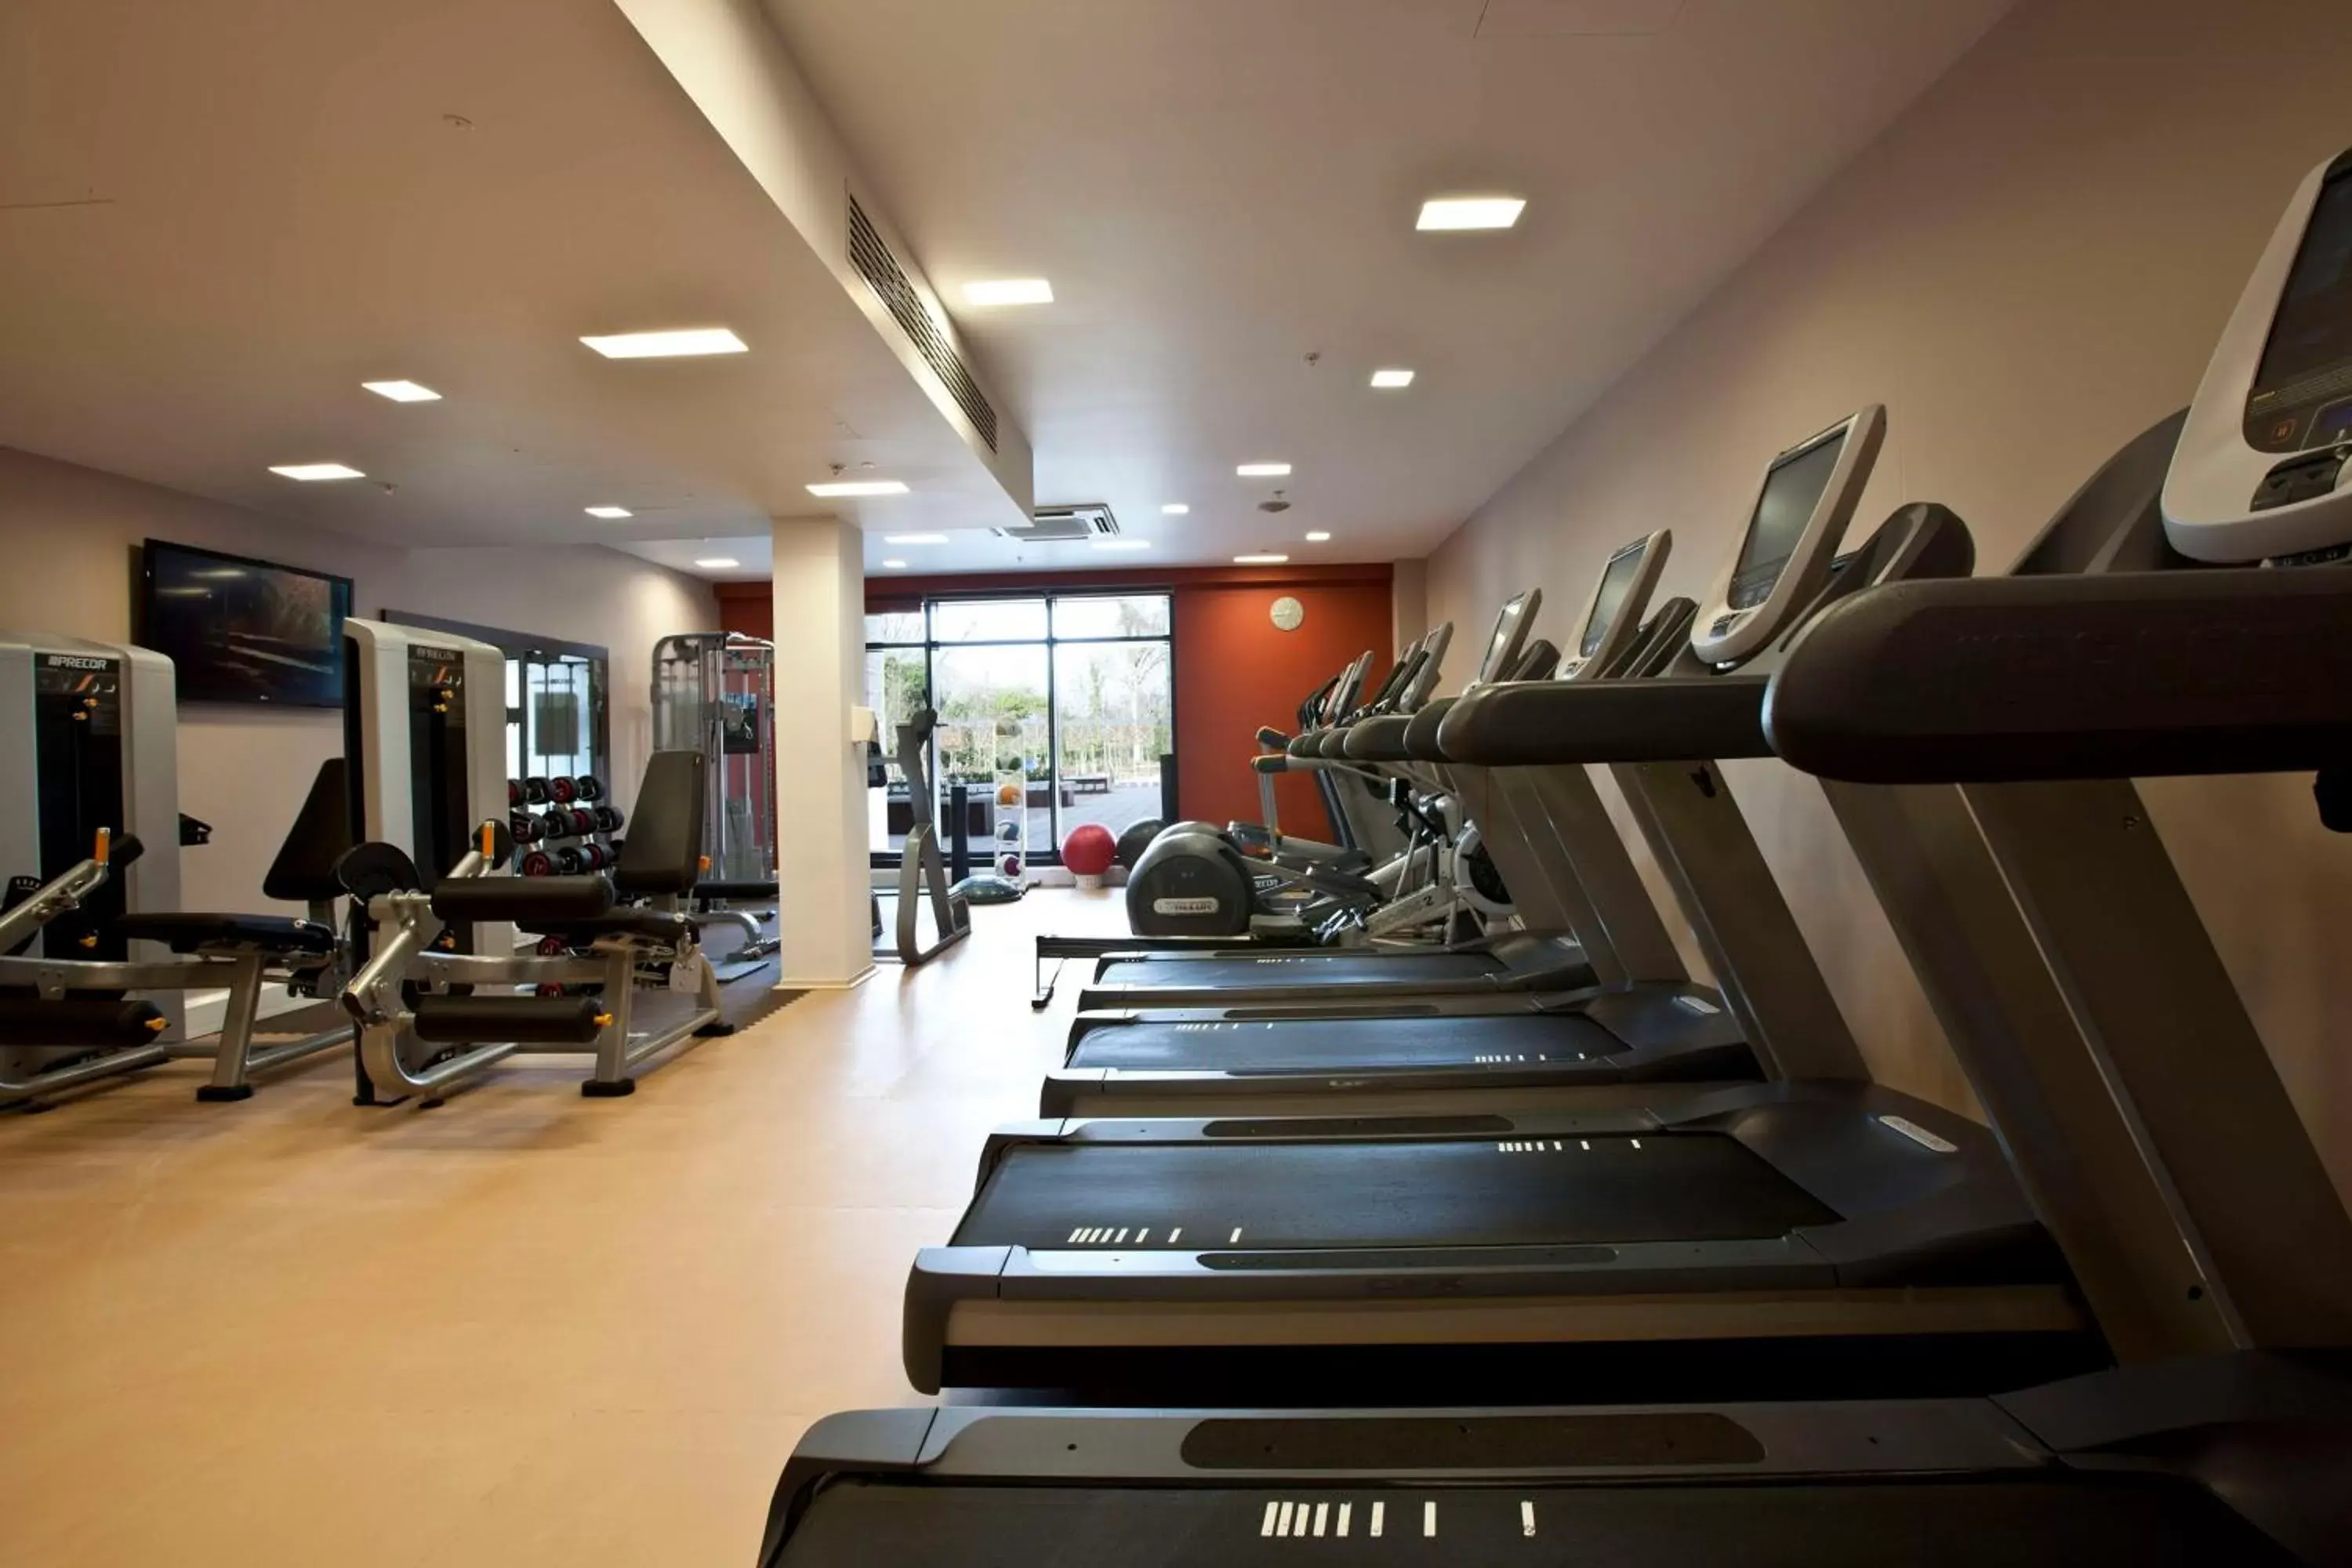 Fitness centre/facilities, Fitness Center/Facilities in Hilton London Heathrow Airport Terminal 5